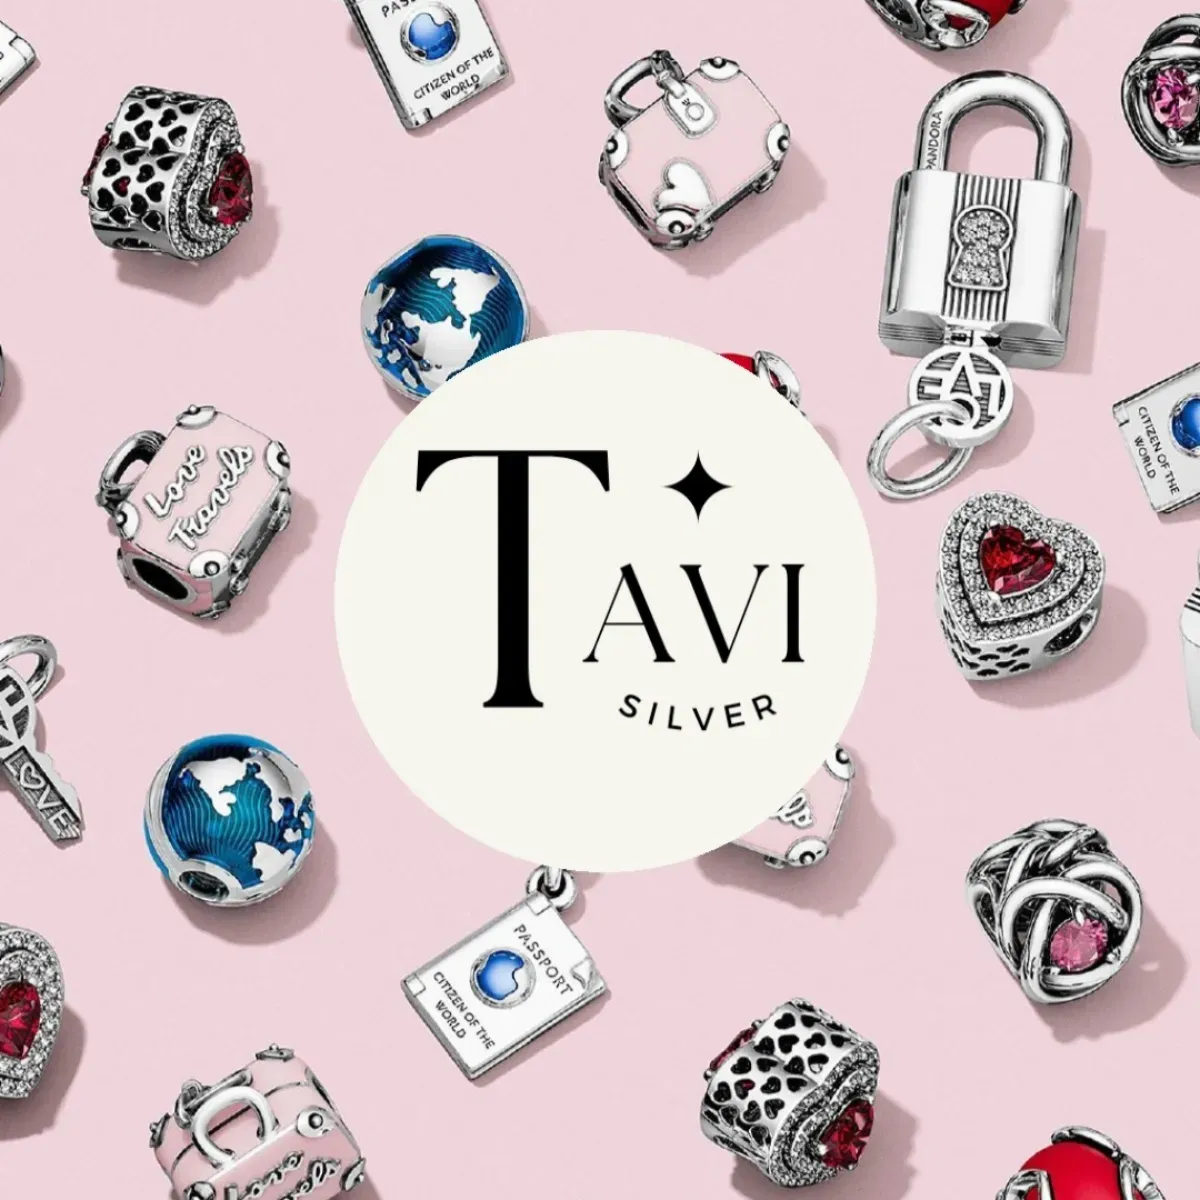 Tavi Silver